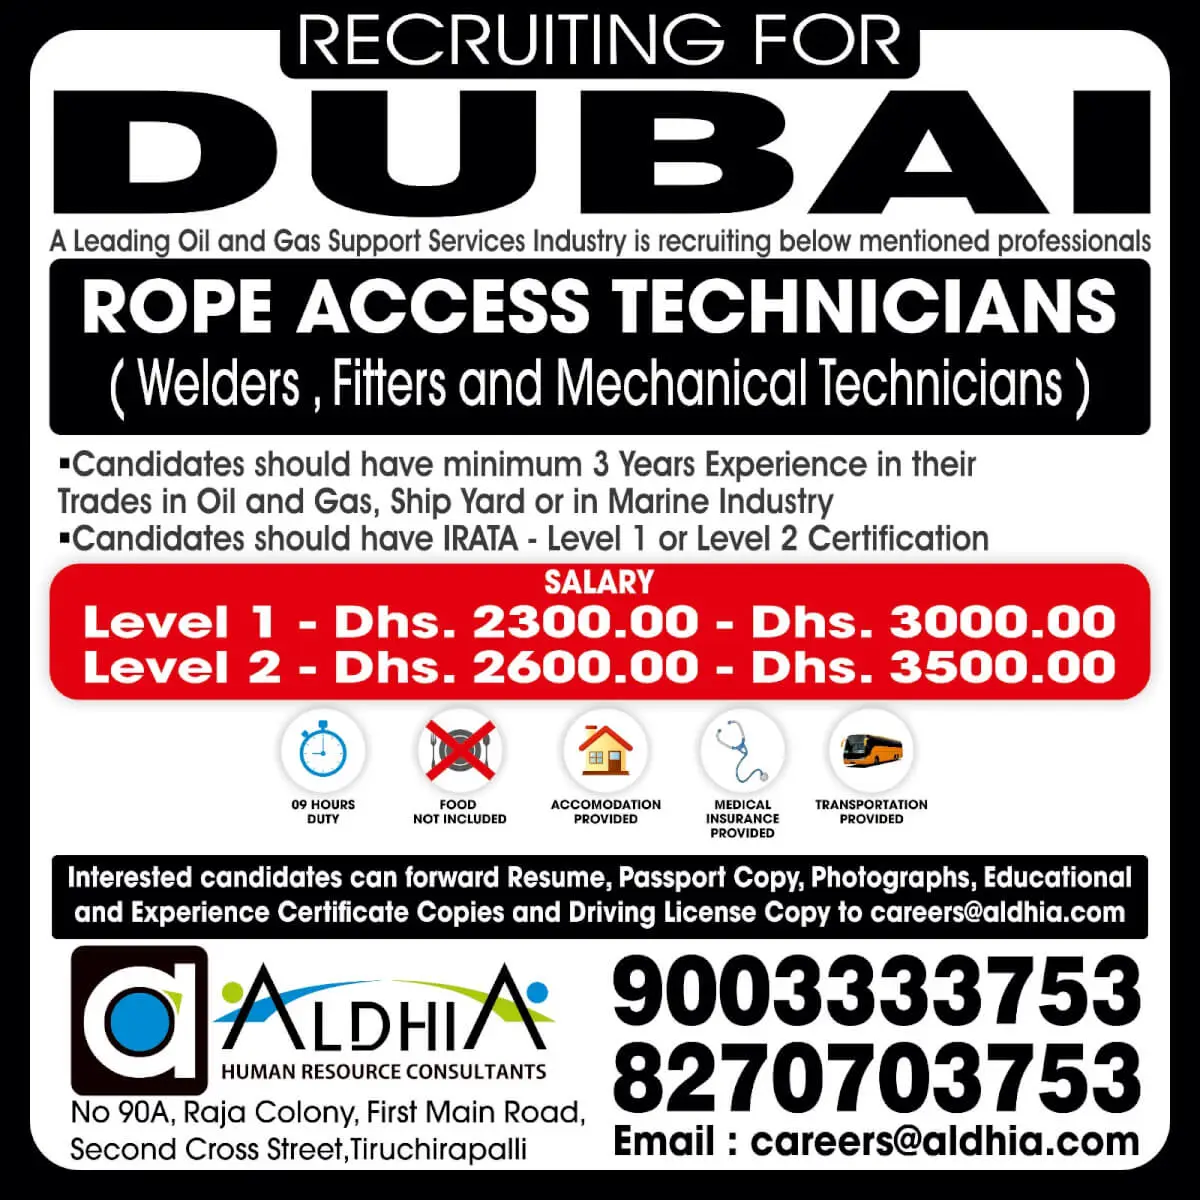 Dubai 365 - Rope Access Technicians Jobs in Dubai